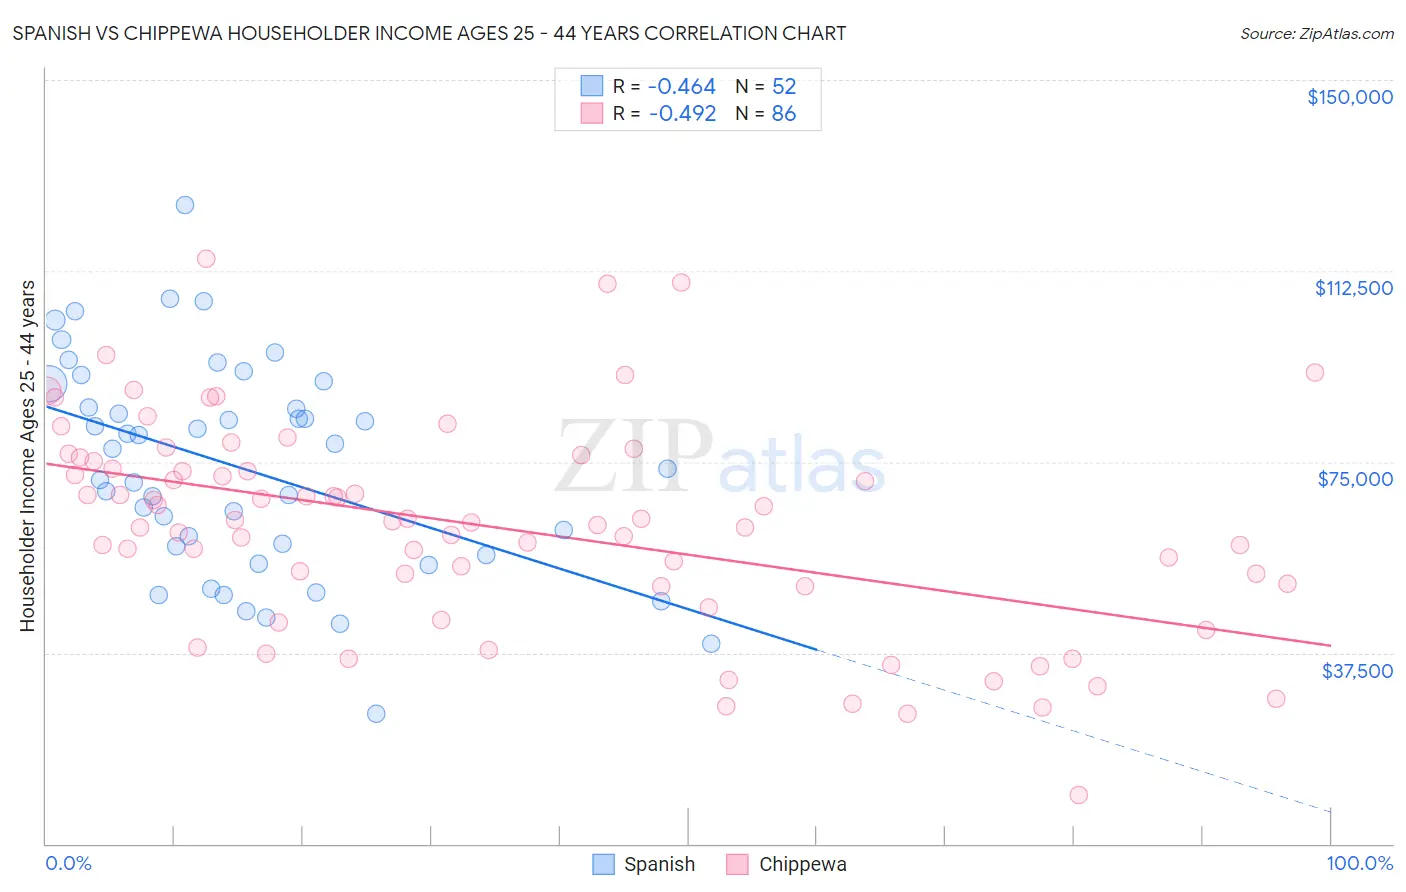 Spanish vs Chippewa Householder Income Ages 25 - 44 years